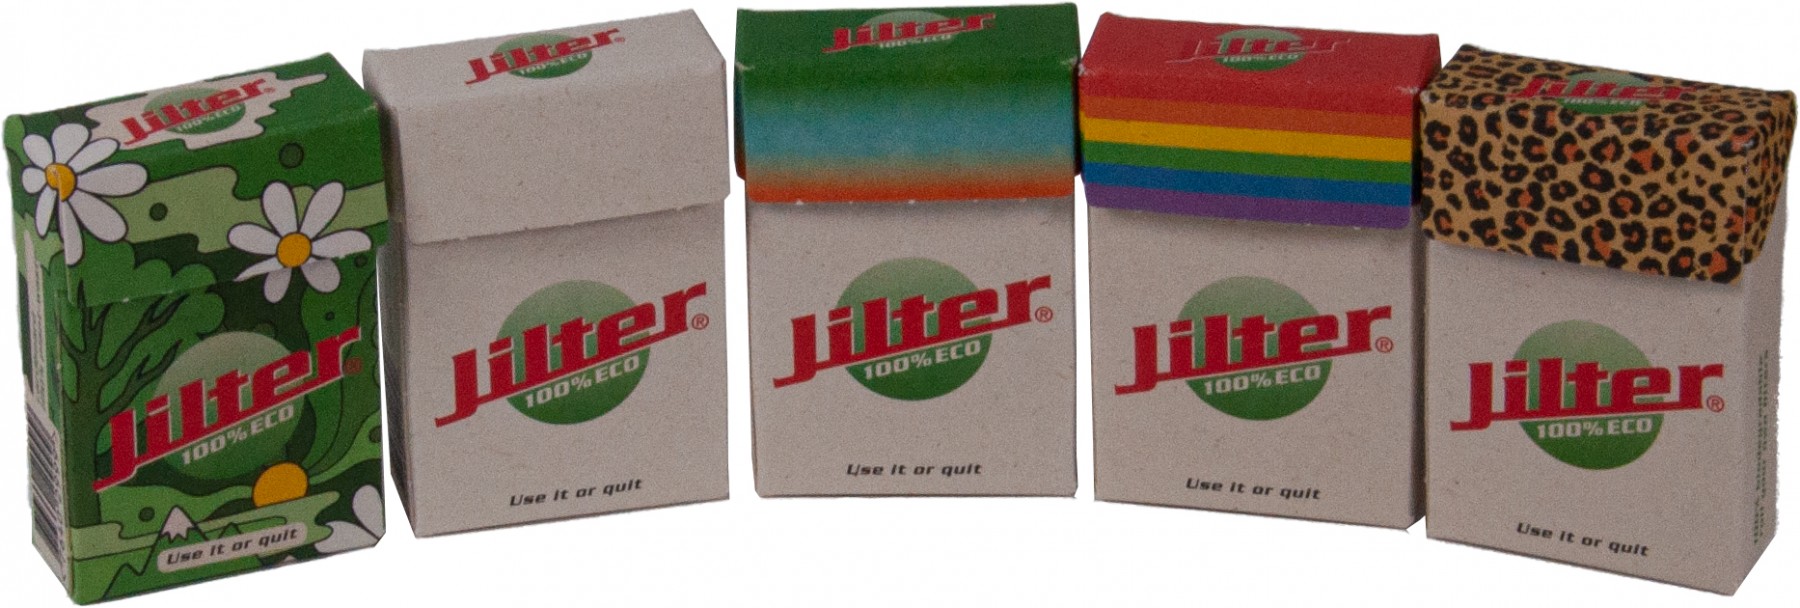 Jilter Filter Eco 100% Filtros esponja 0